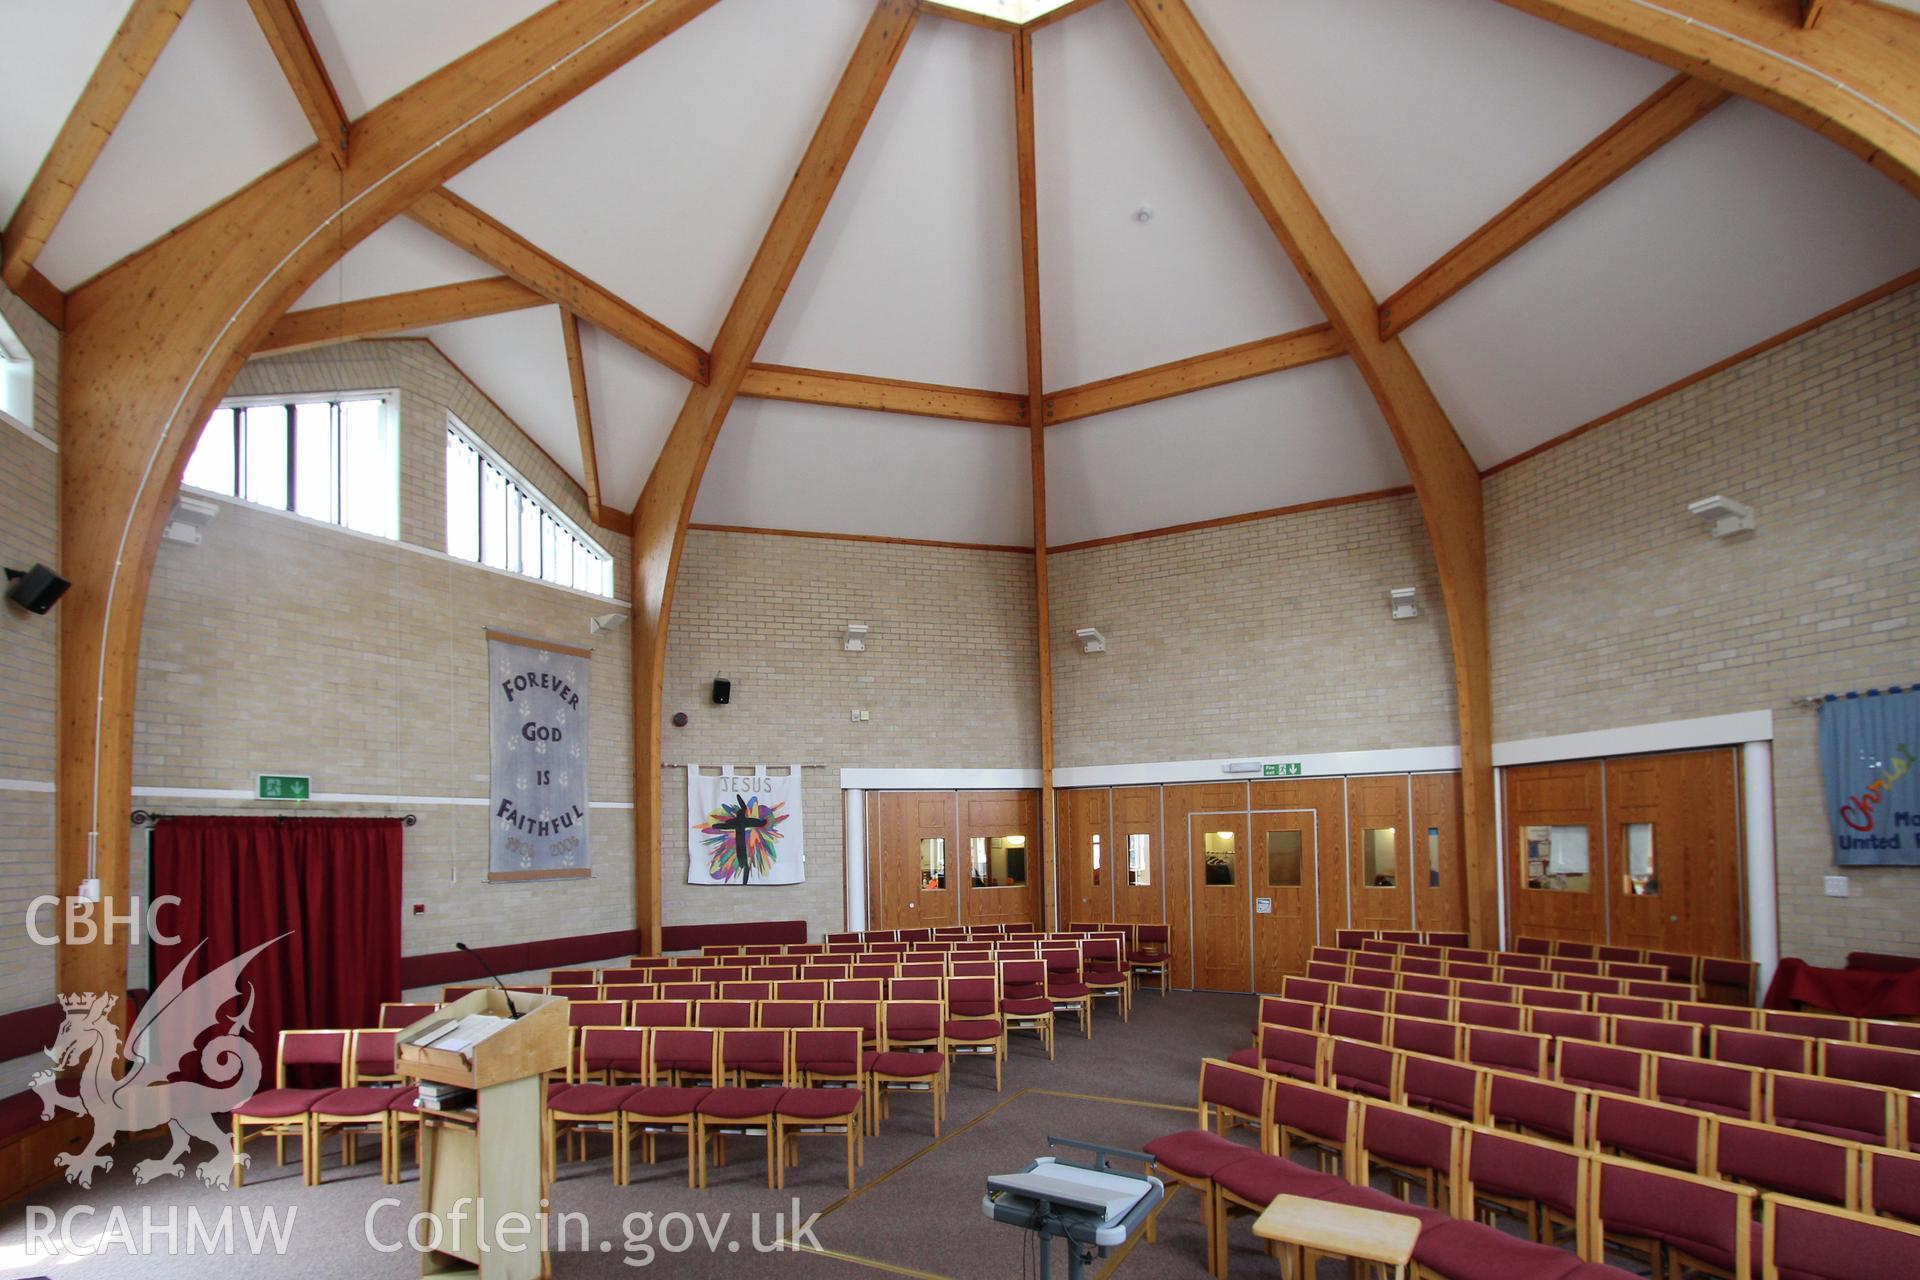 Manselton URC Chapel, Swansea, interior looking west